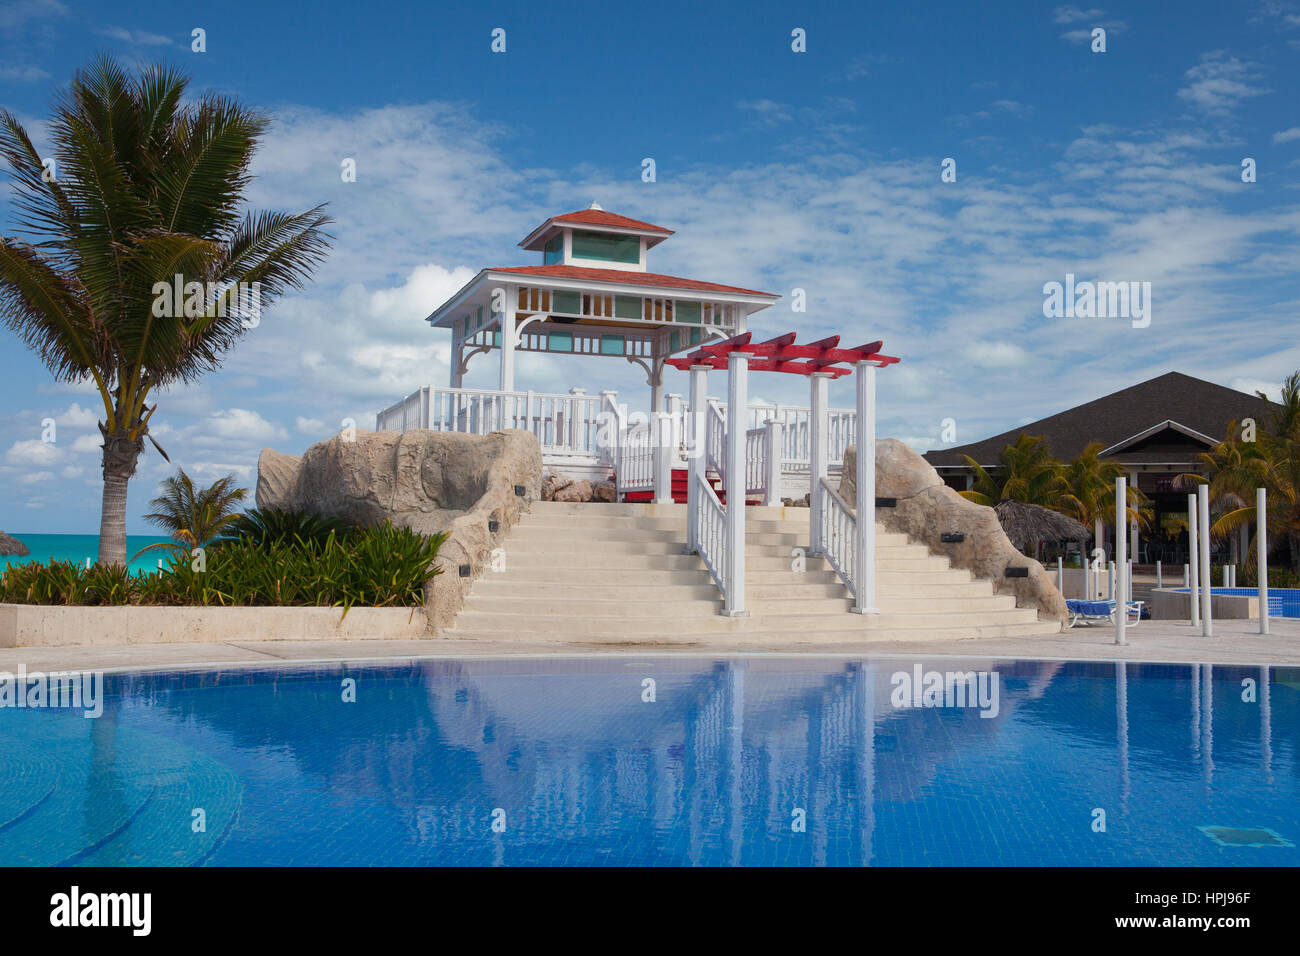 Santa Maria, Cuba - January 31,2017:  Swimming pool in Hotel Gaviota Cayo Santa Maria.Cuba main industry has become travel and tourism. Stock Photo